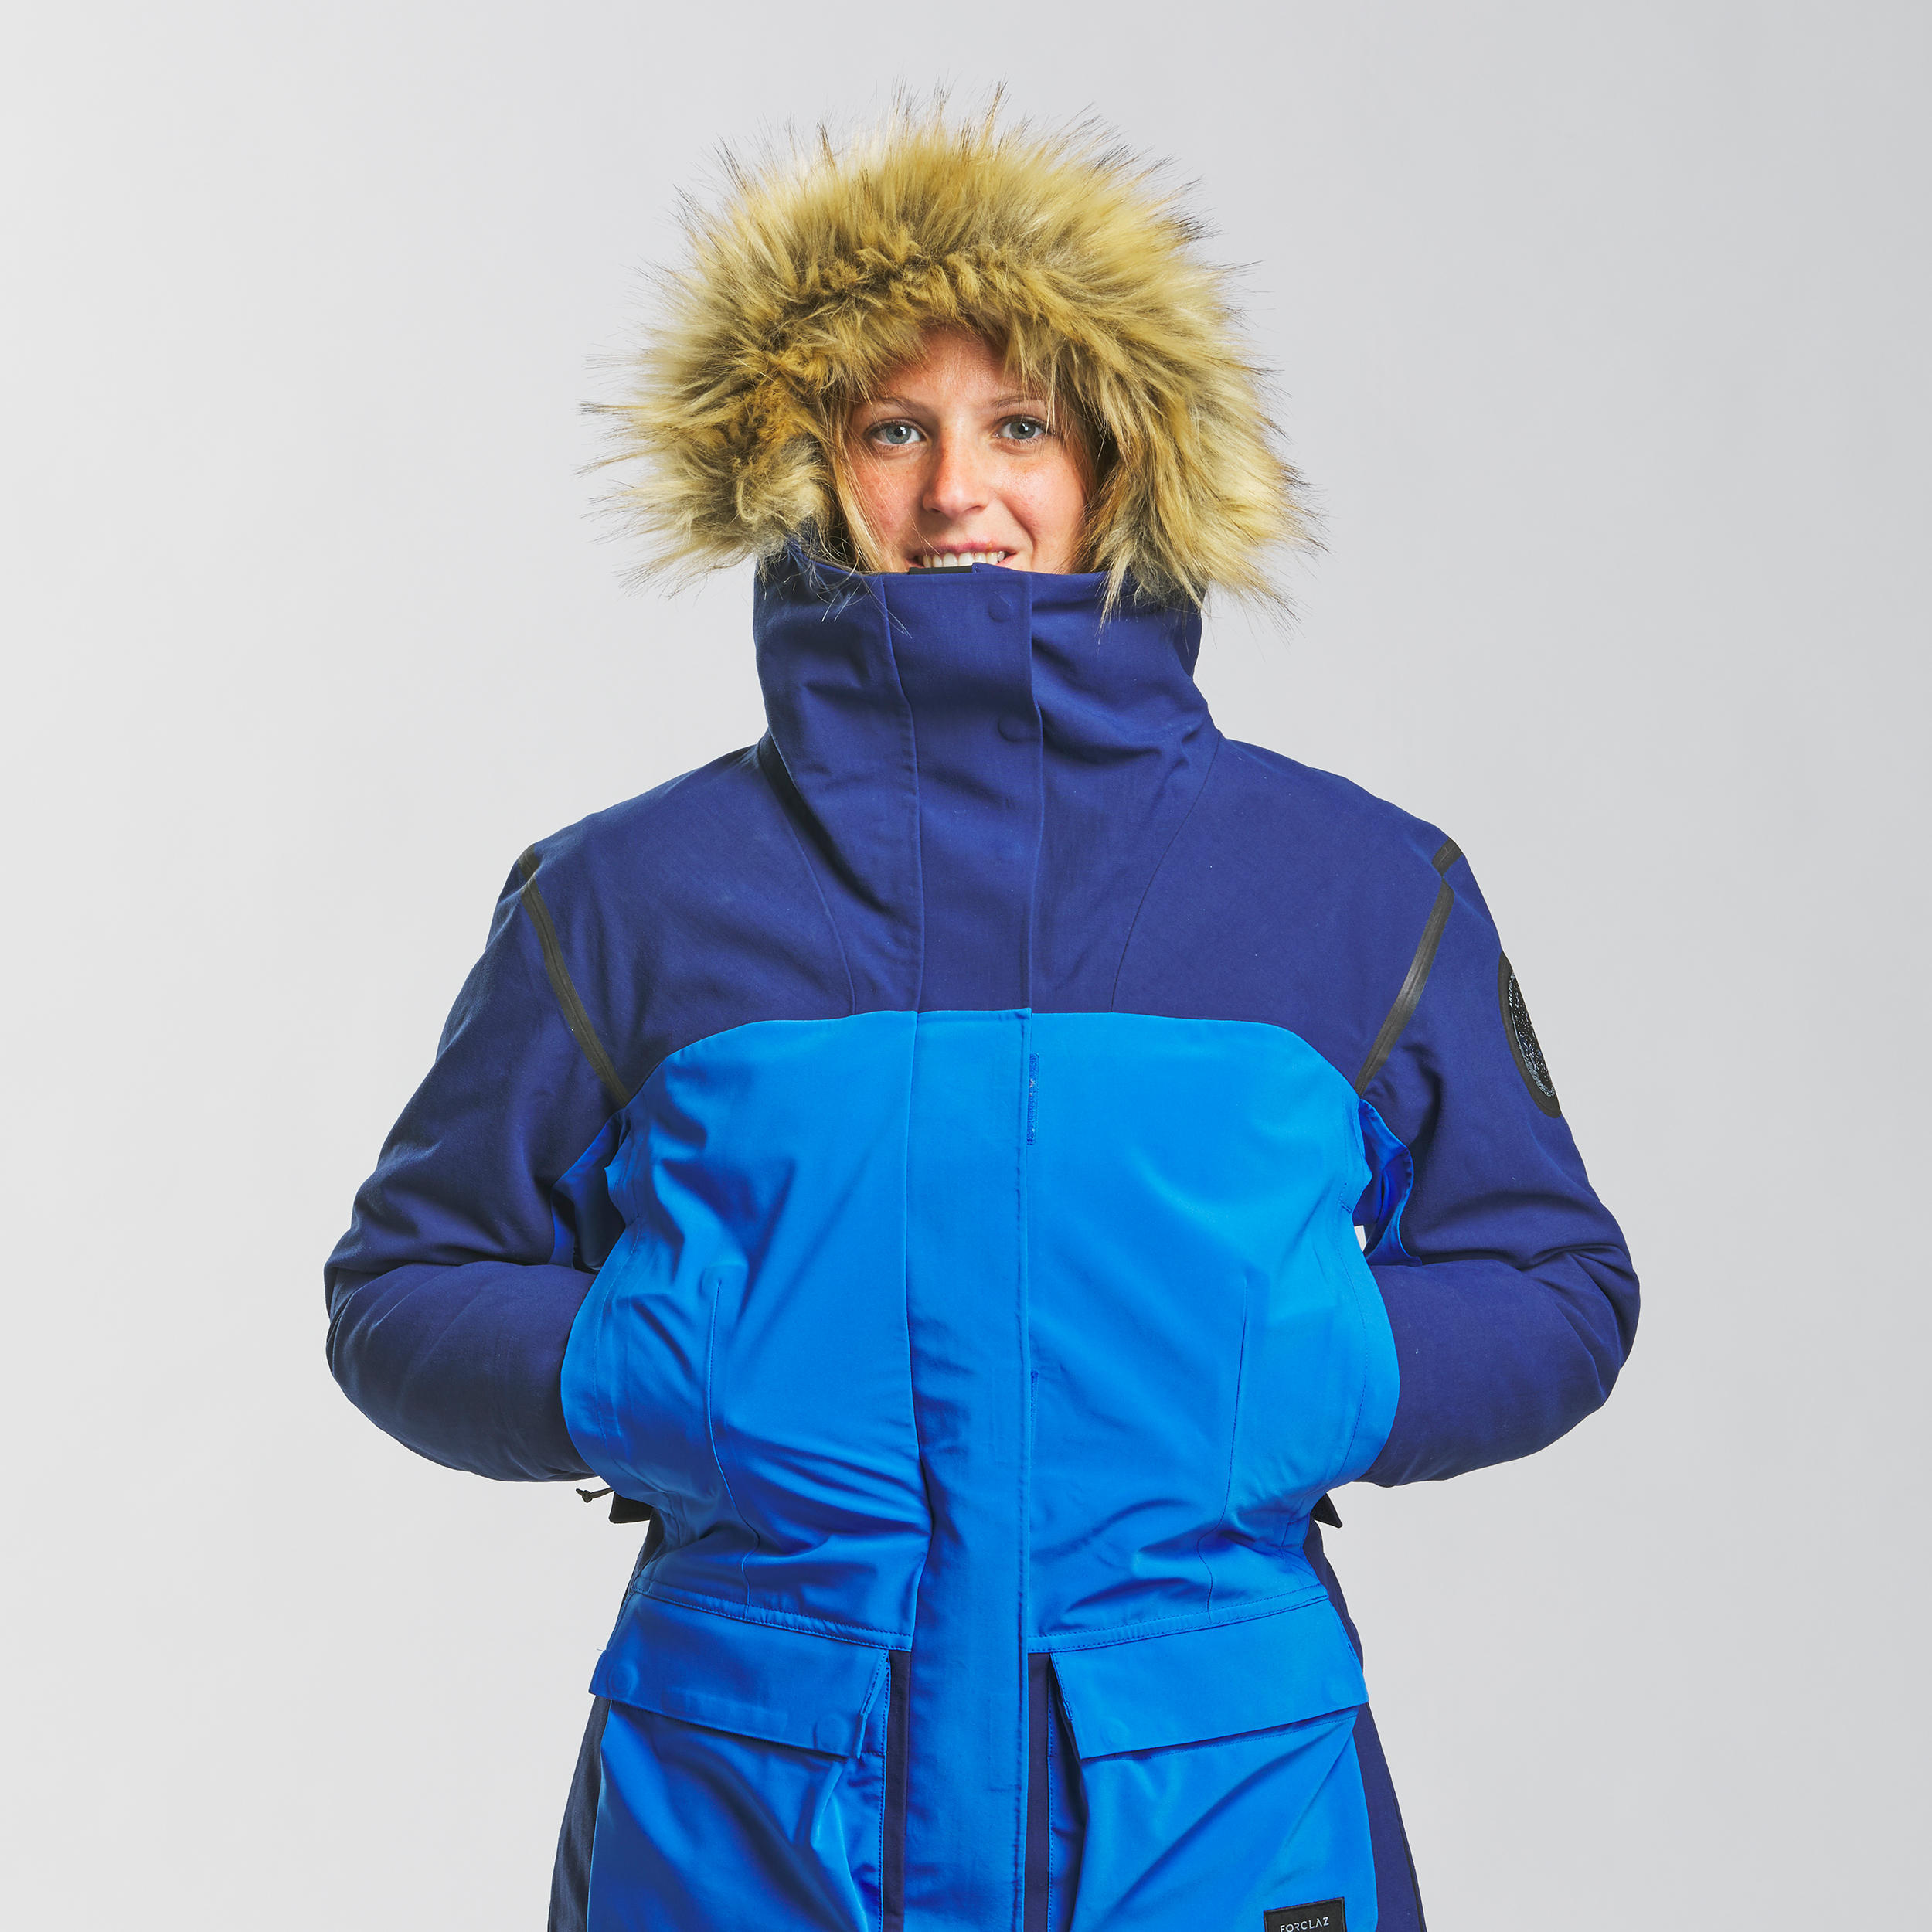 3in1 waterproof parka trekking jacket - Artic 900 -33°C - Women's 8/21